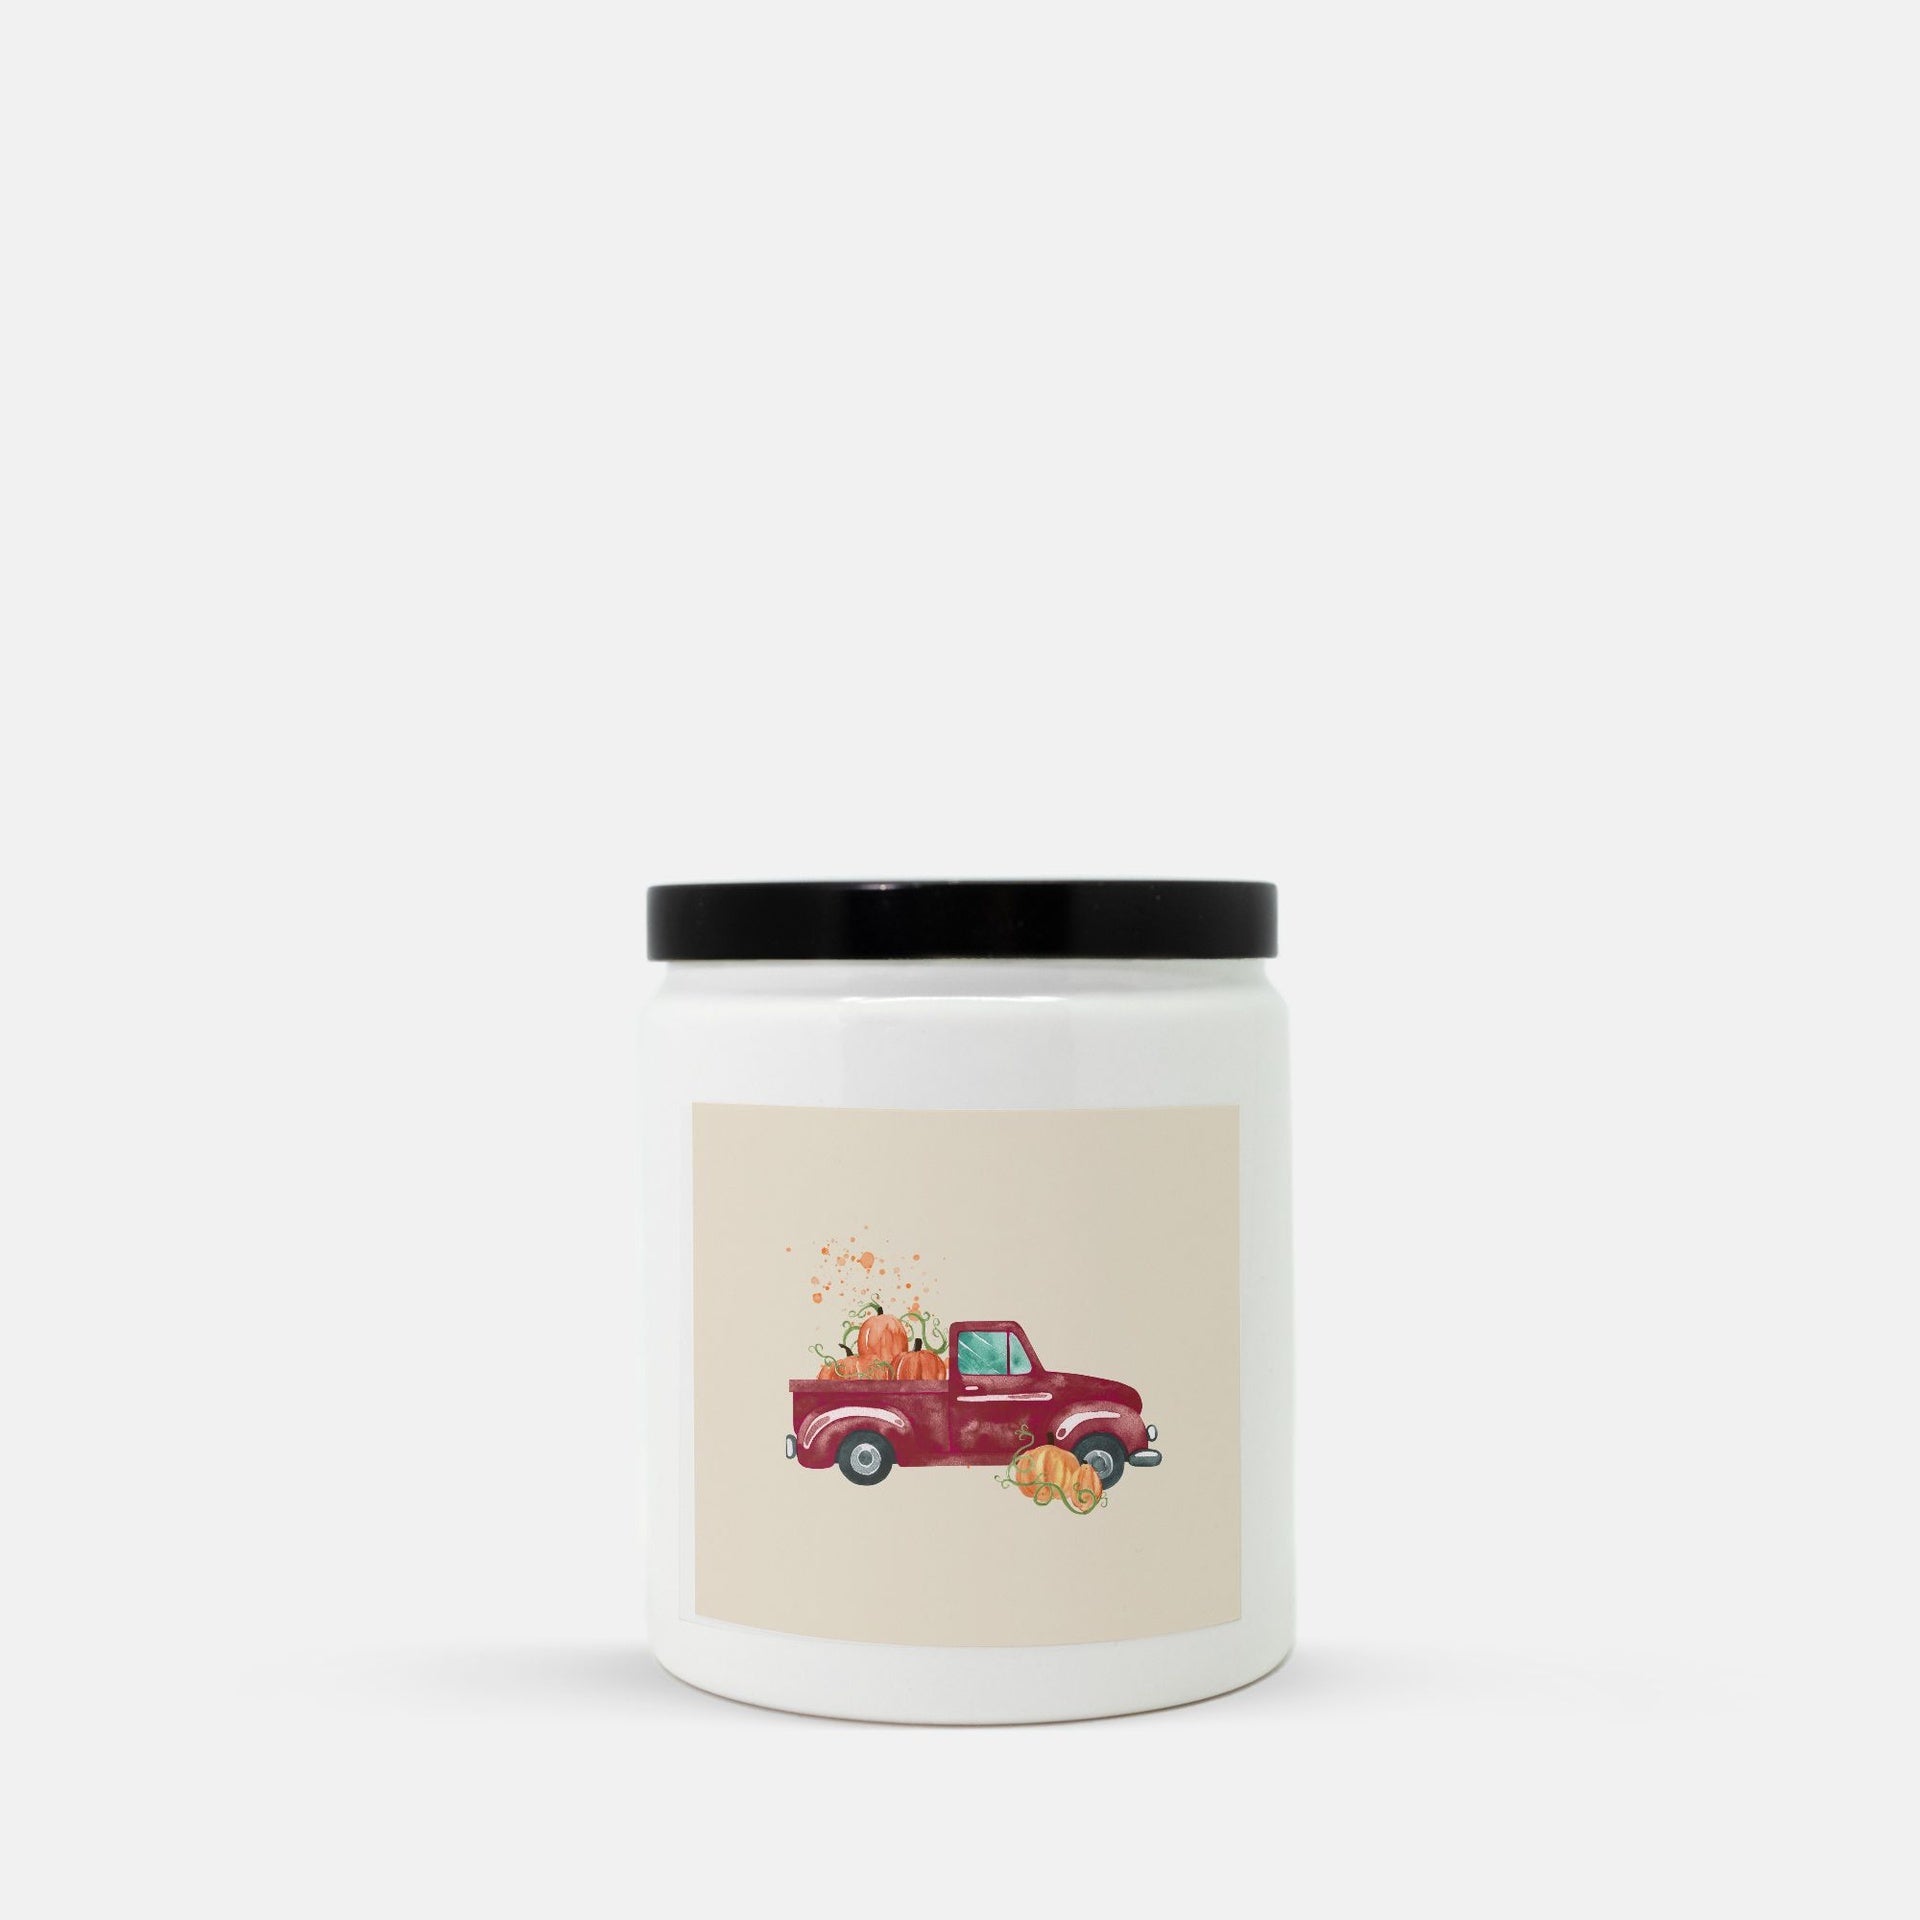 Lifestyle Details - Burgundy Rustic Truck Ceramic Candle w Black Lid - Macintosh